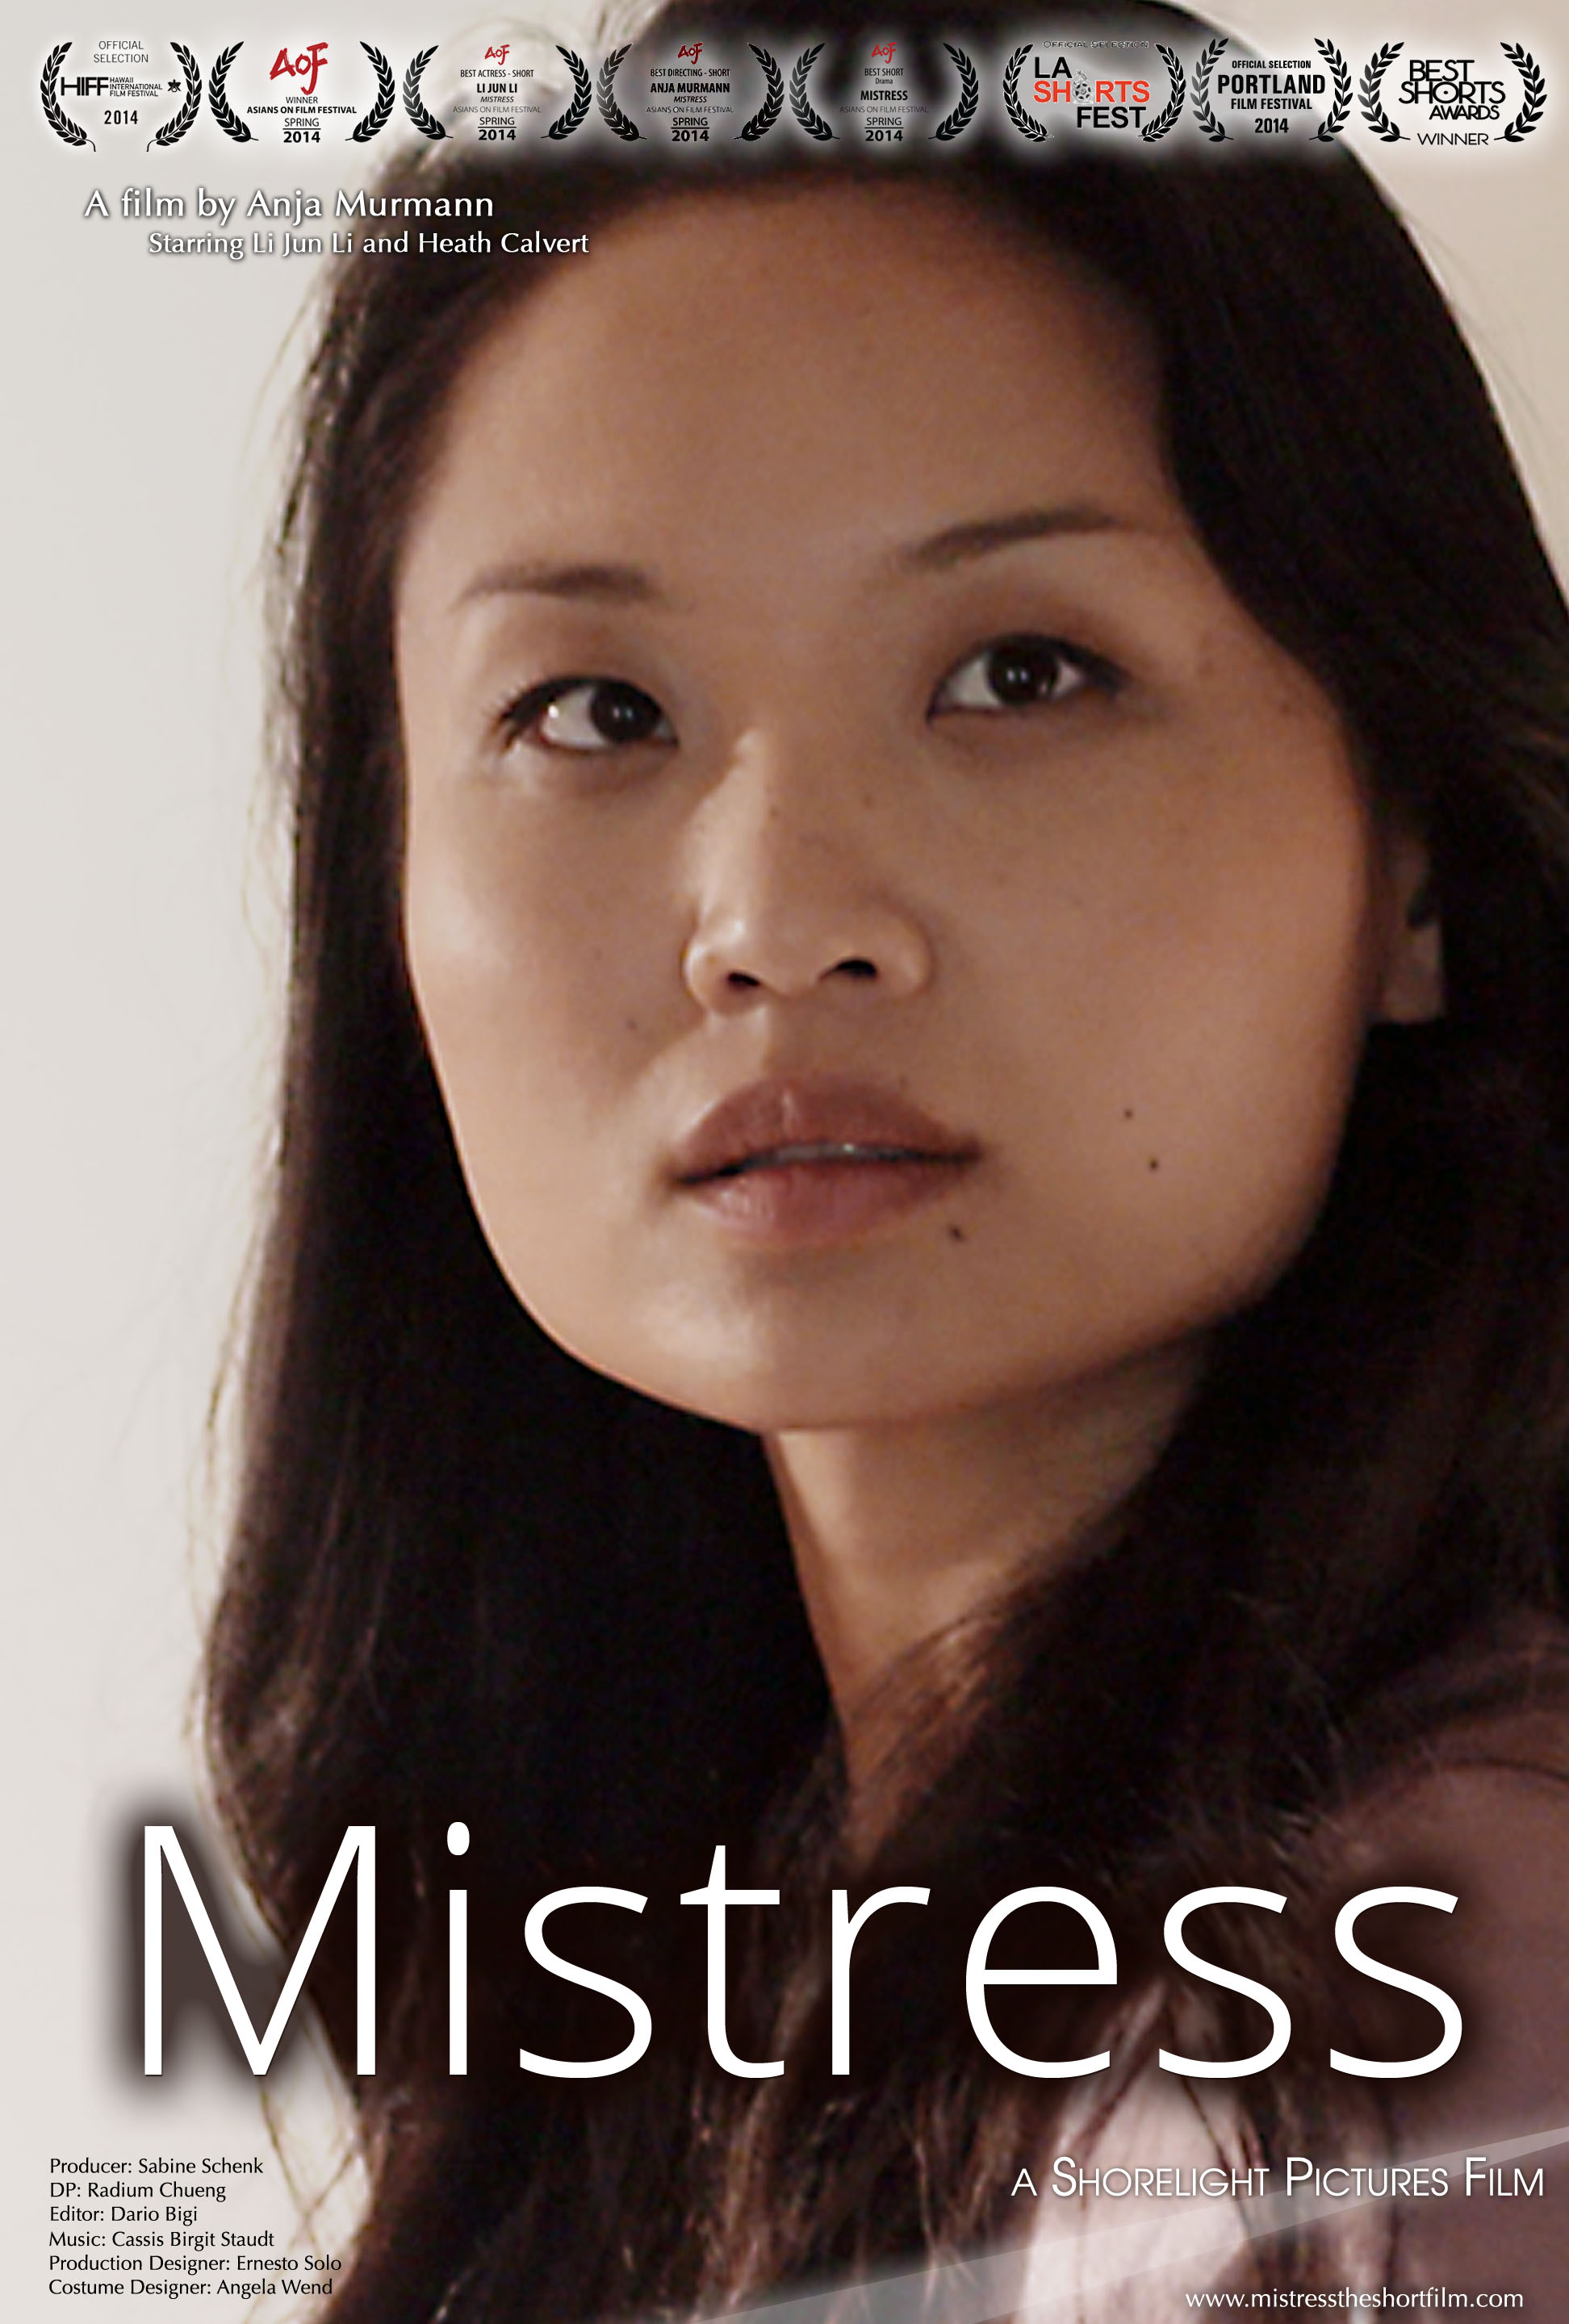 Mistress - The Short FIlm Poster